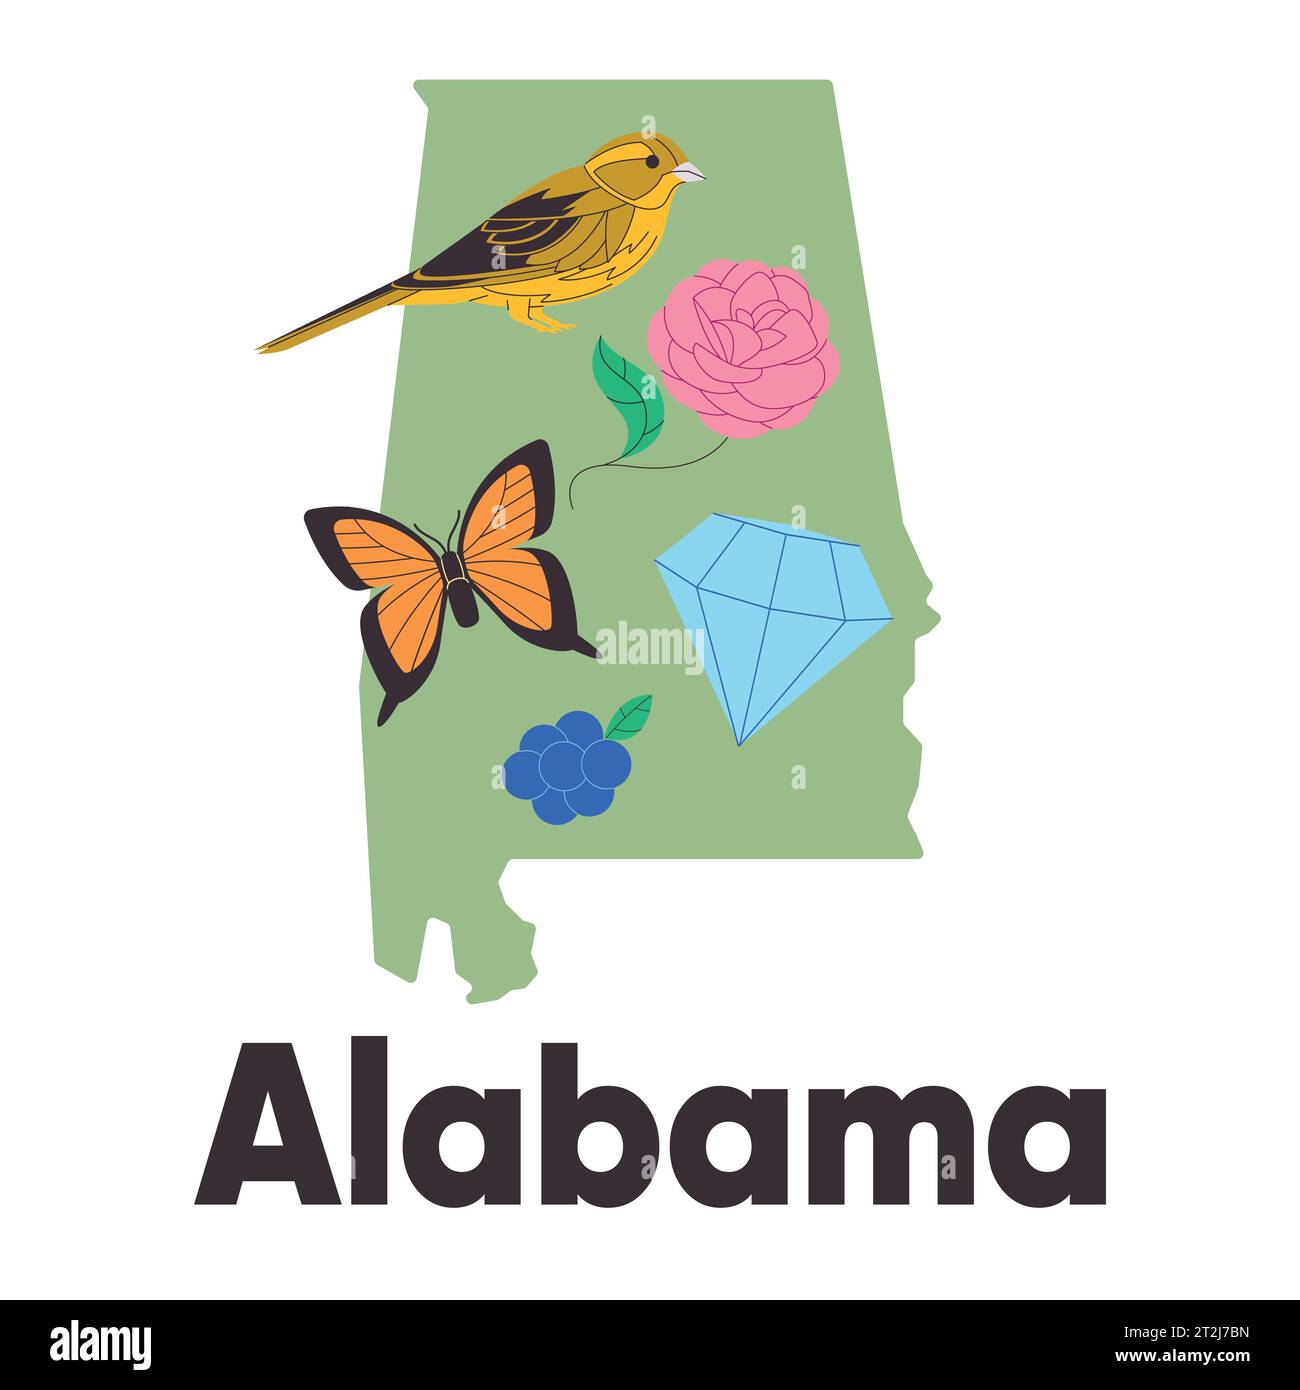 Alabama Karte Symbol des vereinigten staaten Symbol gelbe Hammer Vogel Schmetterling kamelia Blume brombeerillustration Stock Vektor